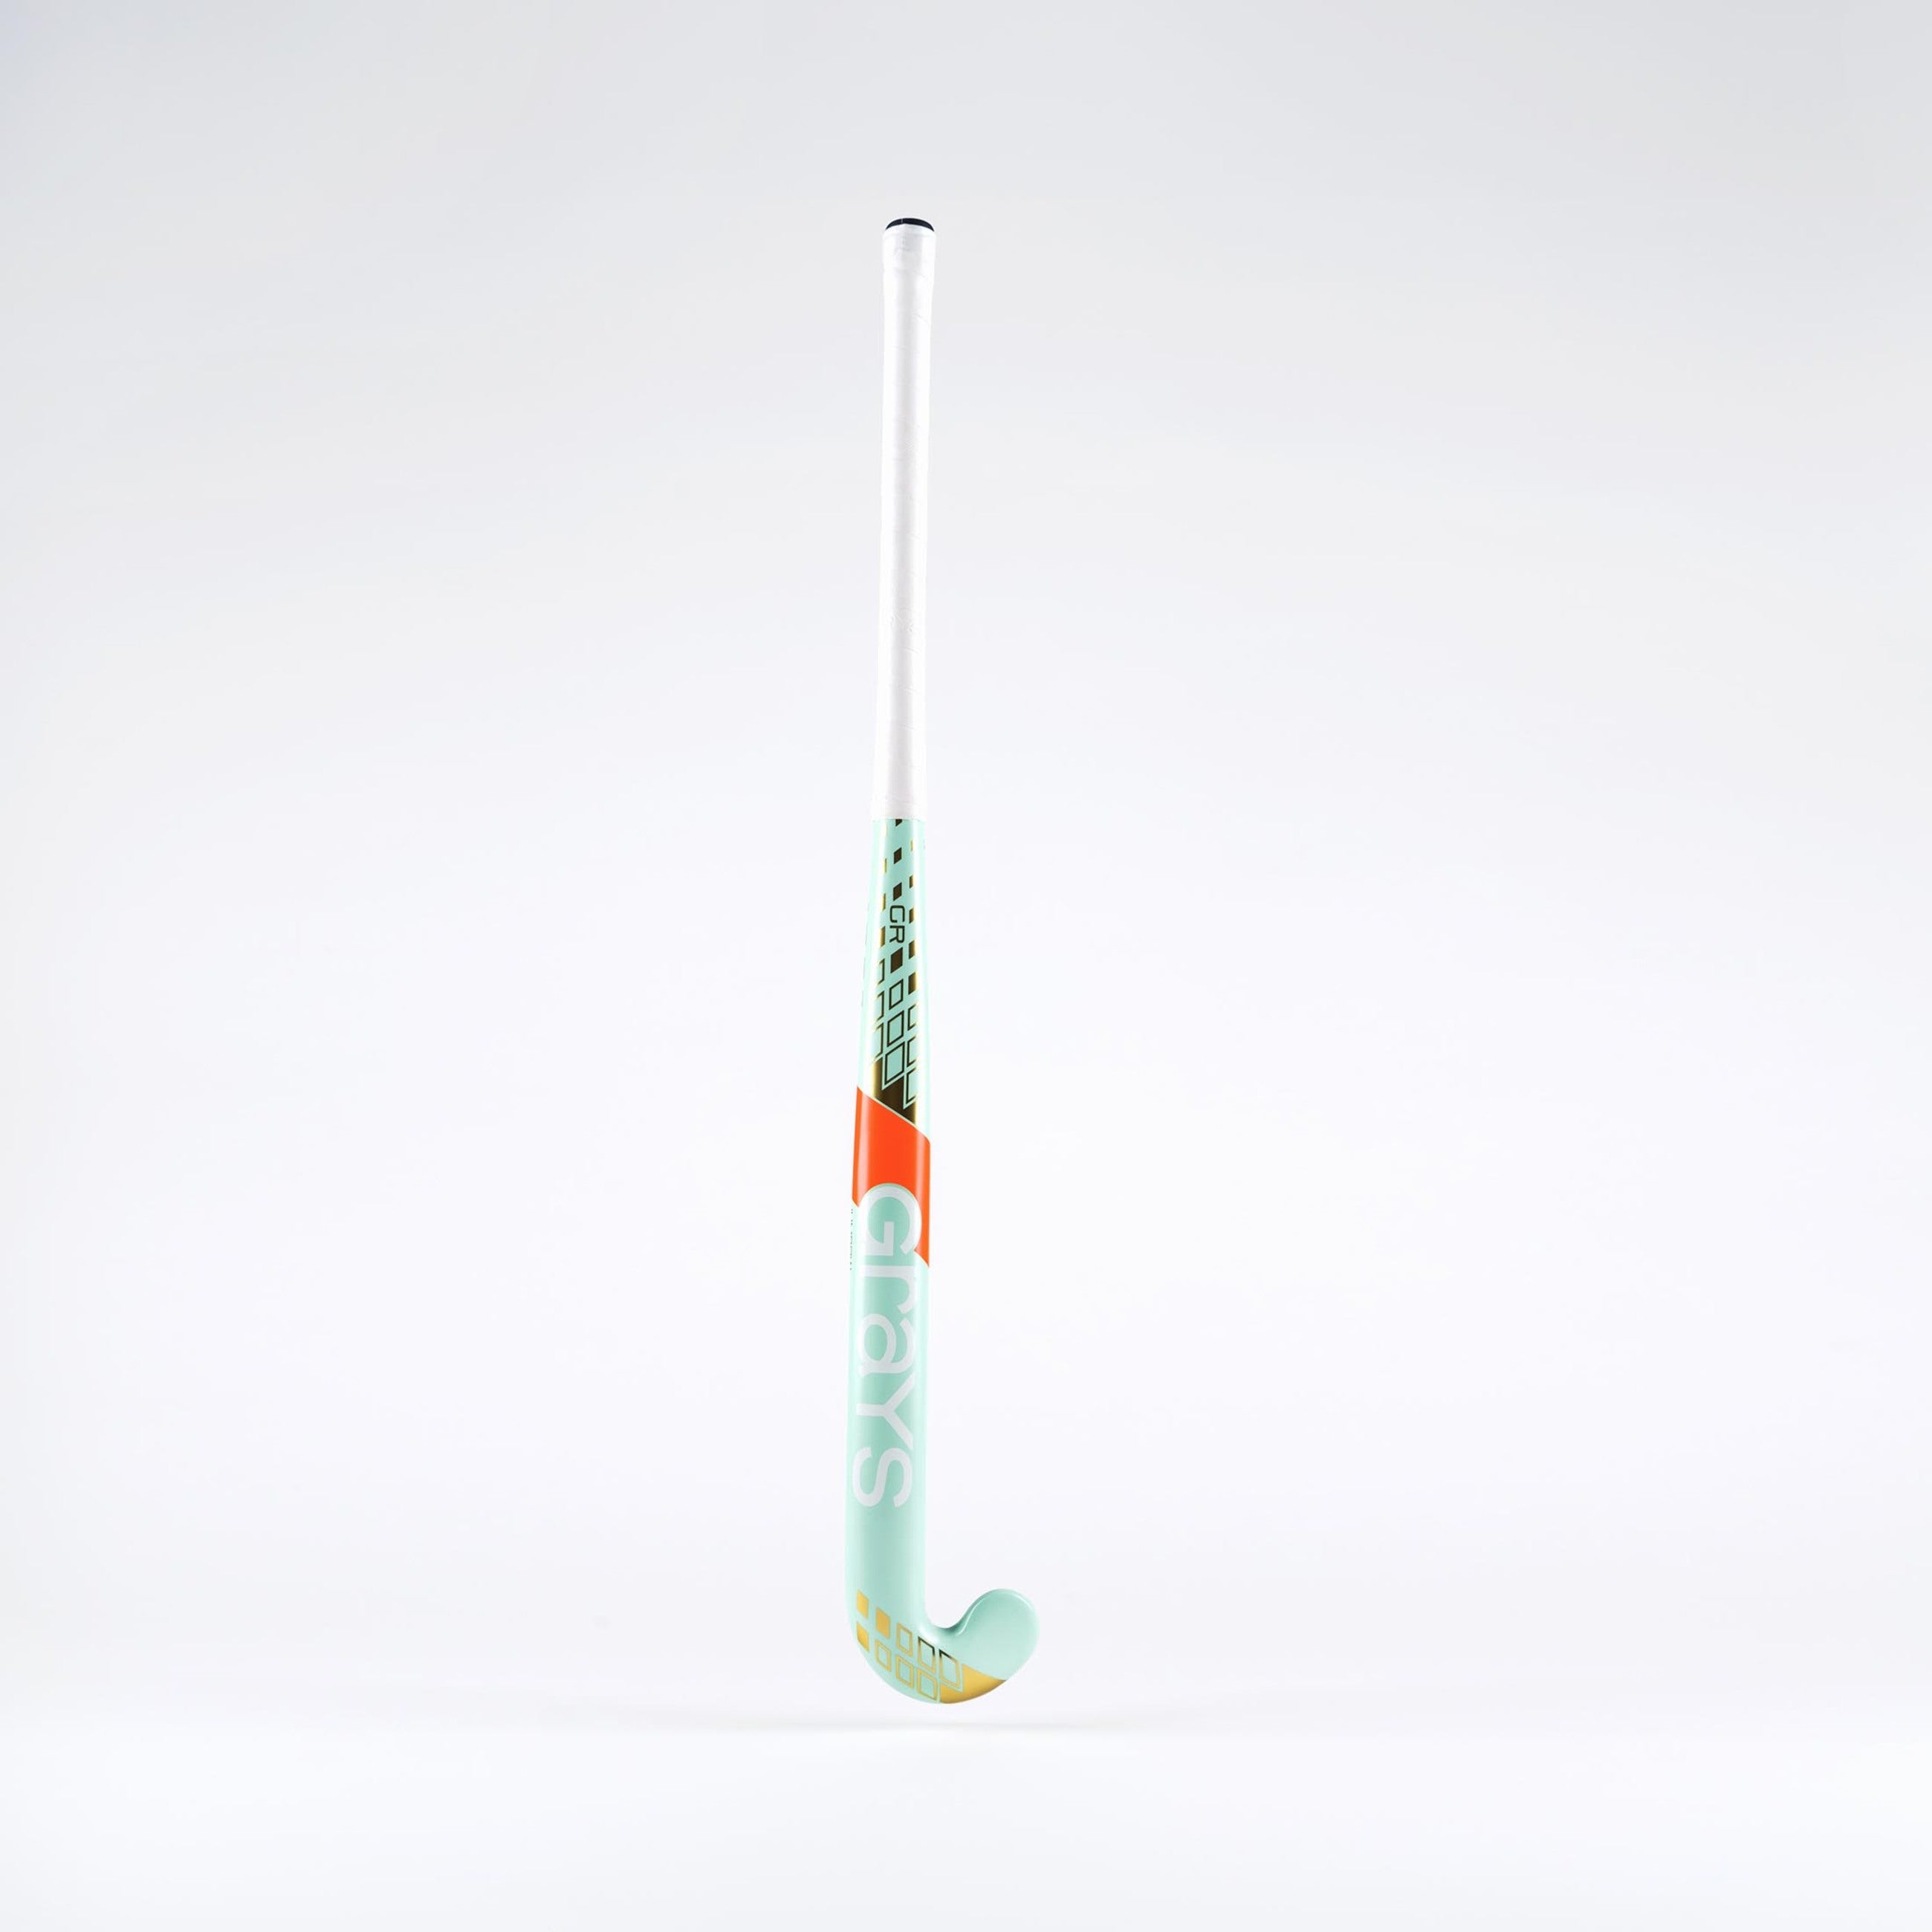 GR10000 Jumbow composite hockeystick